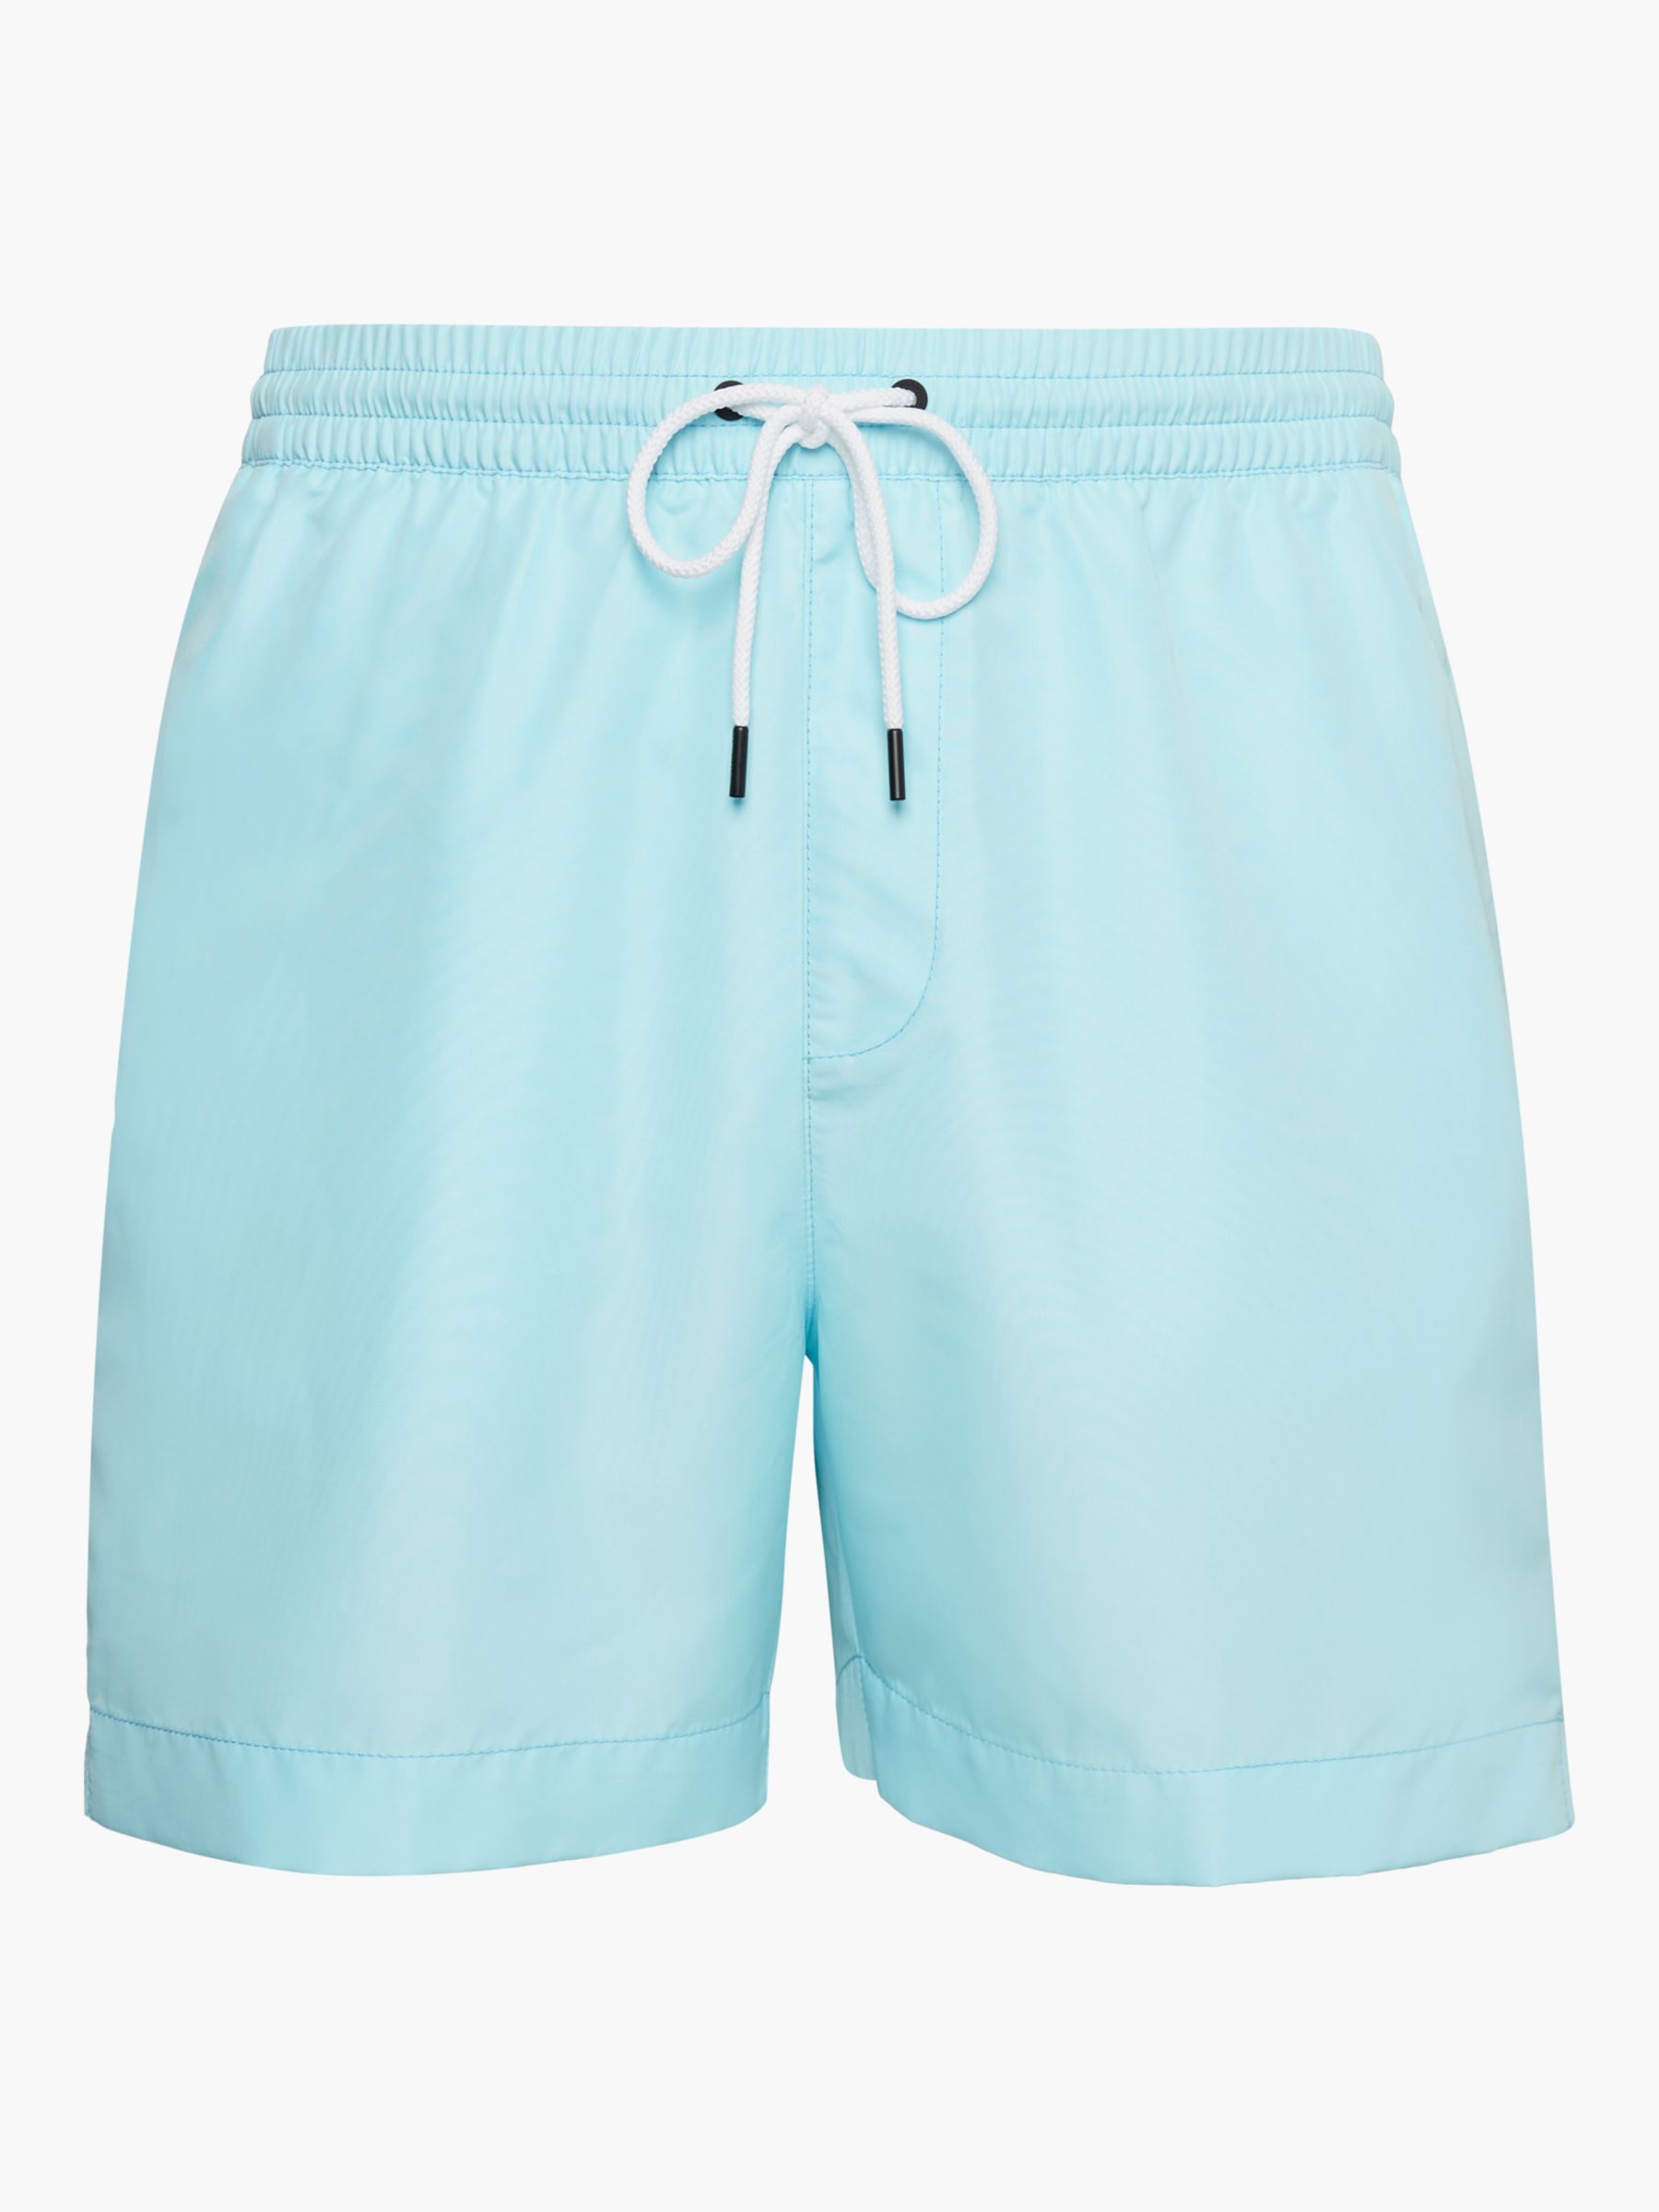 Calvin Klein Drawstring Swim Shorts, Blue, S